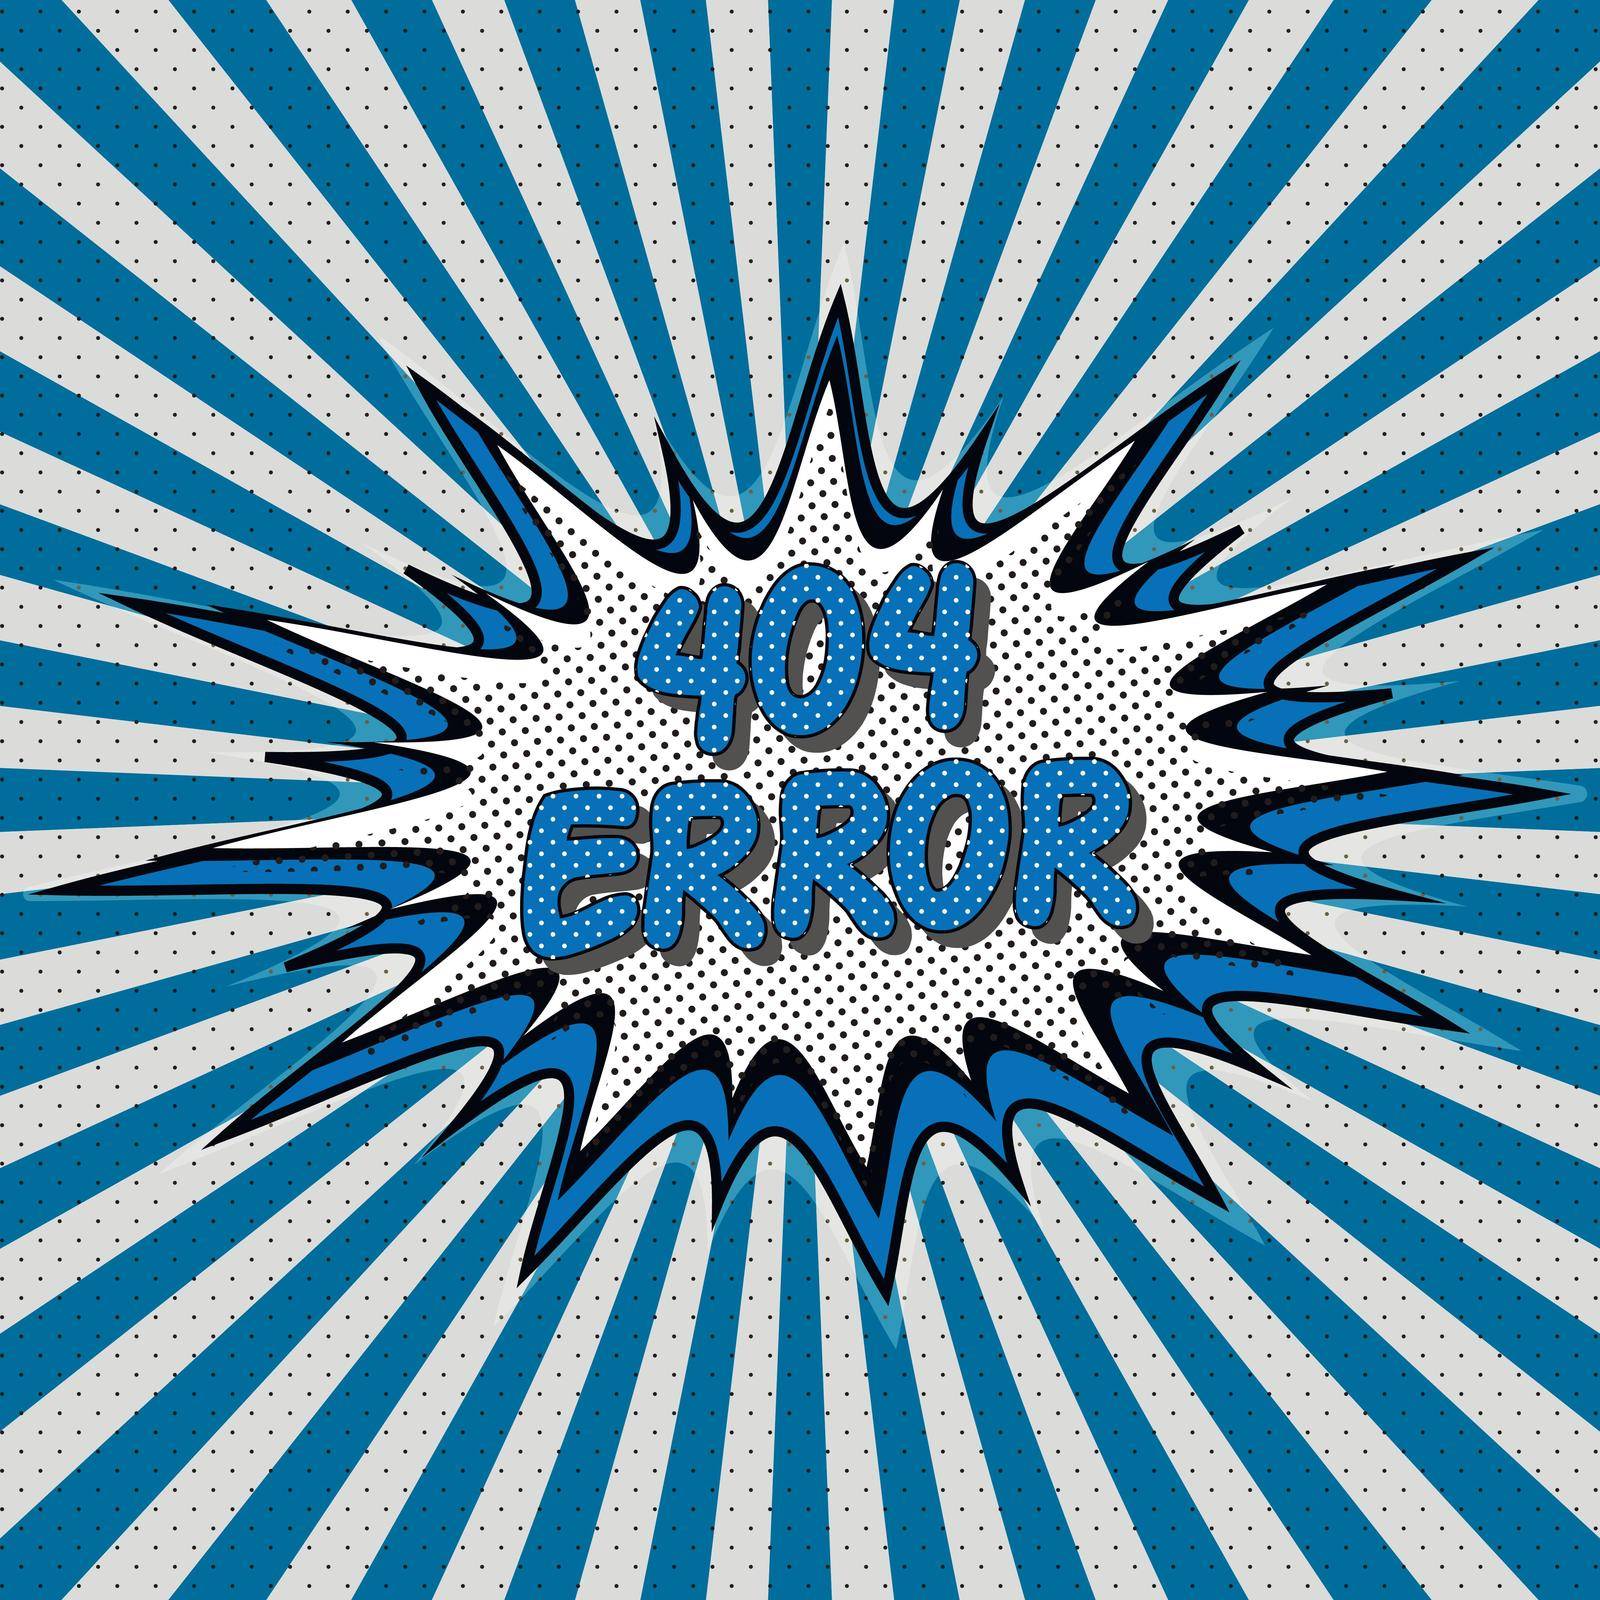 Error 404 page not found pop art style comic by koksikoks